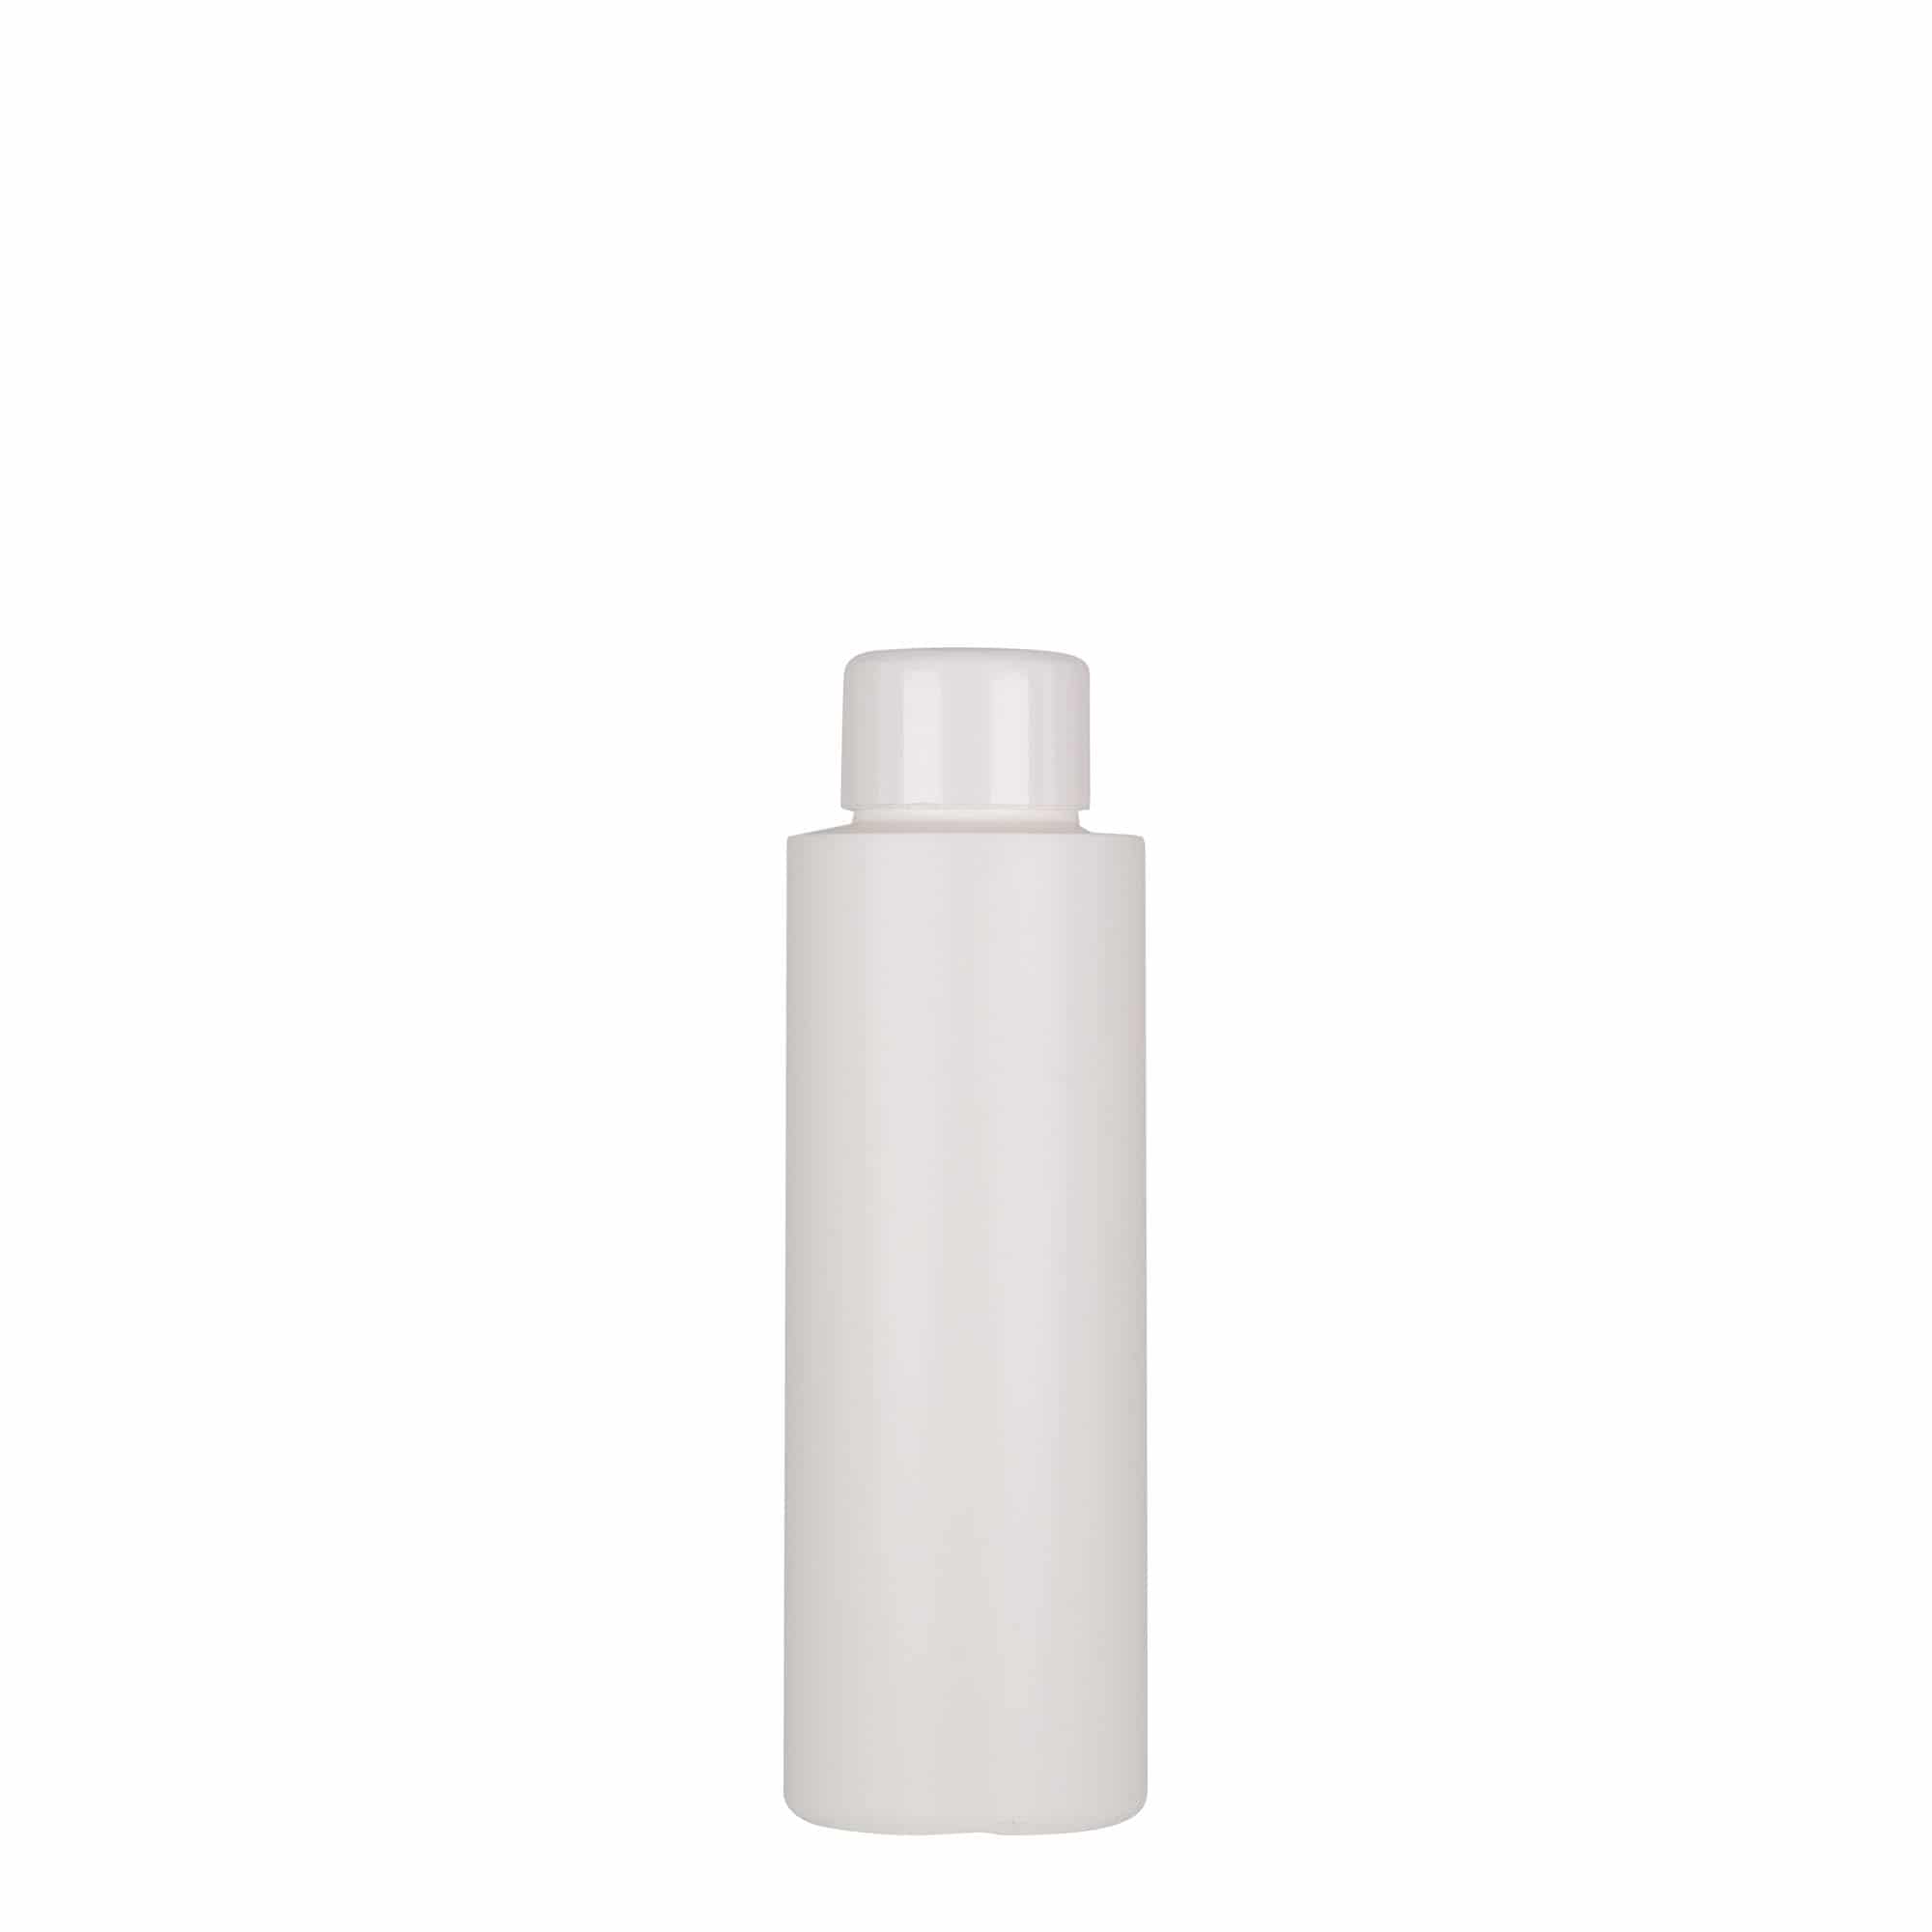 100 ml plastic bottle 'Pipe', green HDPE, white, closure: GPI 24/410